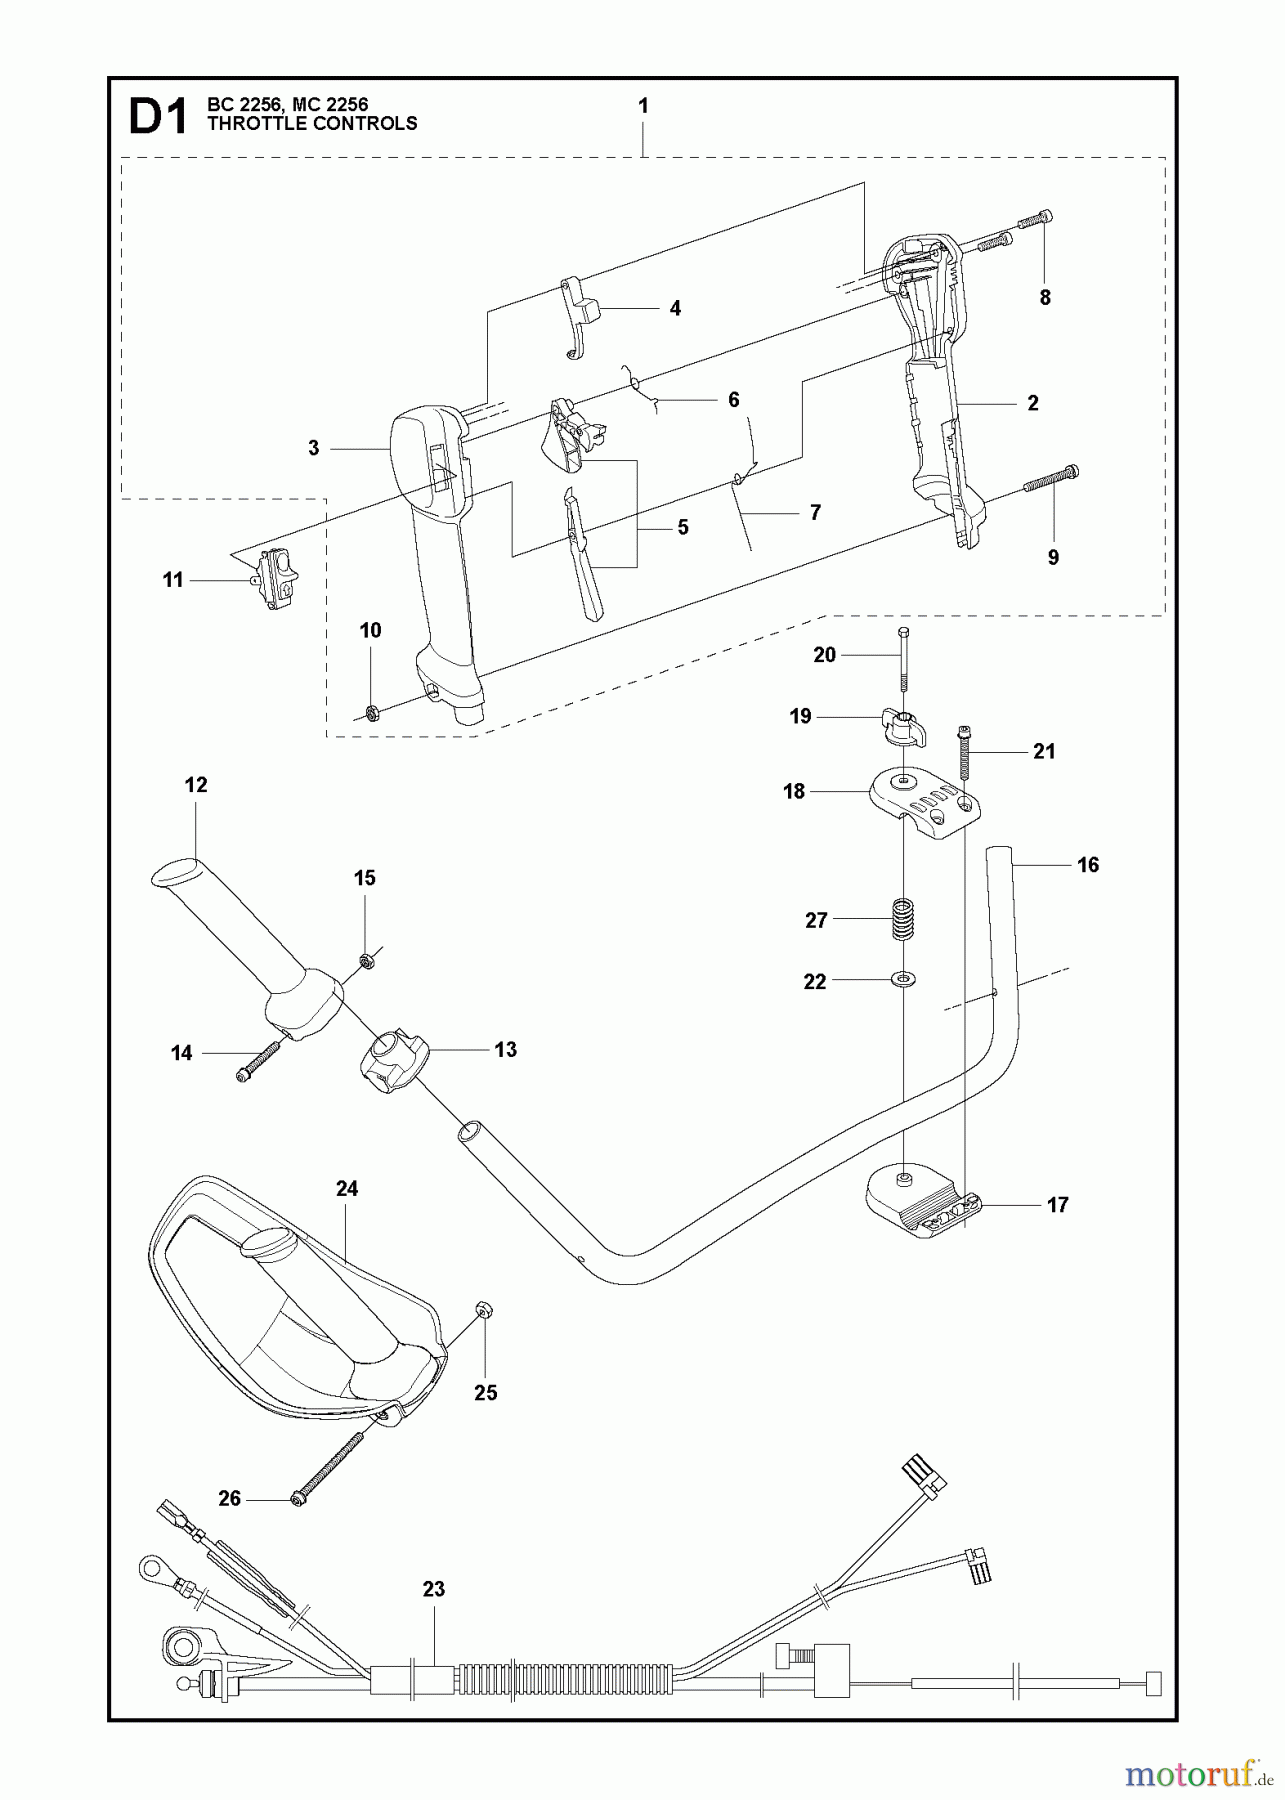  Jonsered Motorsensen, Trimmer BC2256 - Jonsered Brushcutter (2011-01) THROTTLE CONTROLS